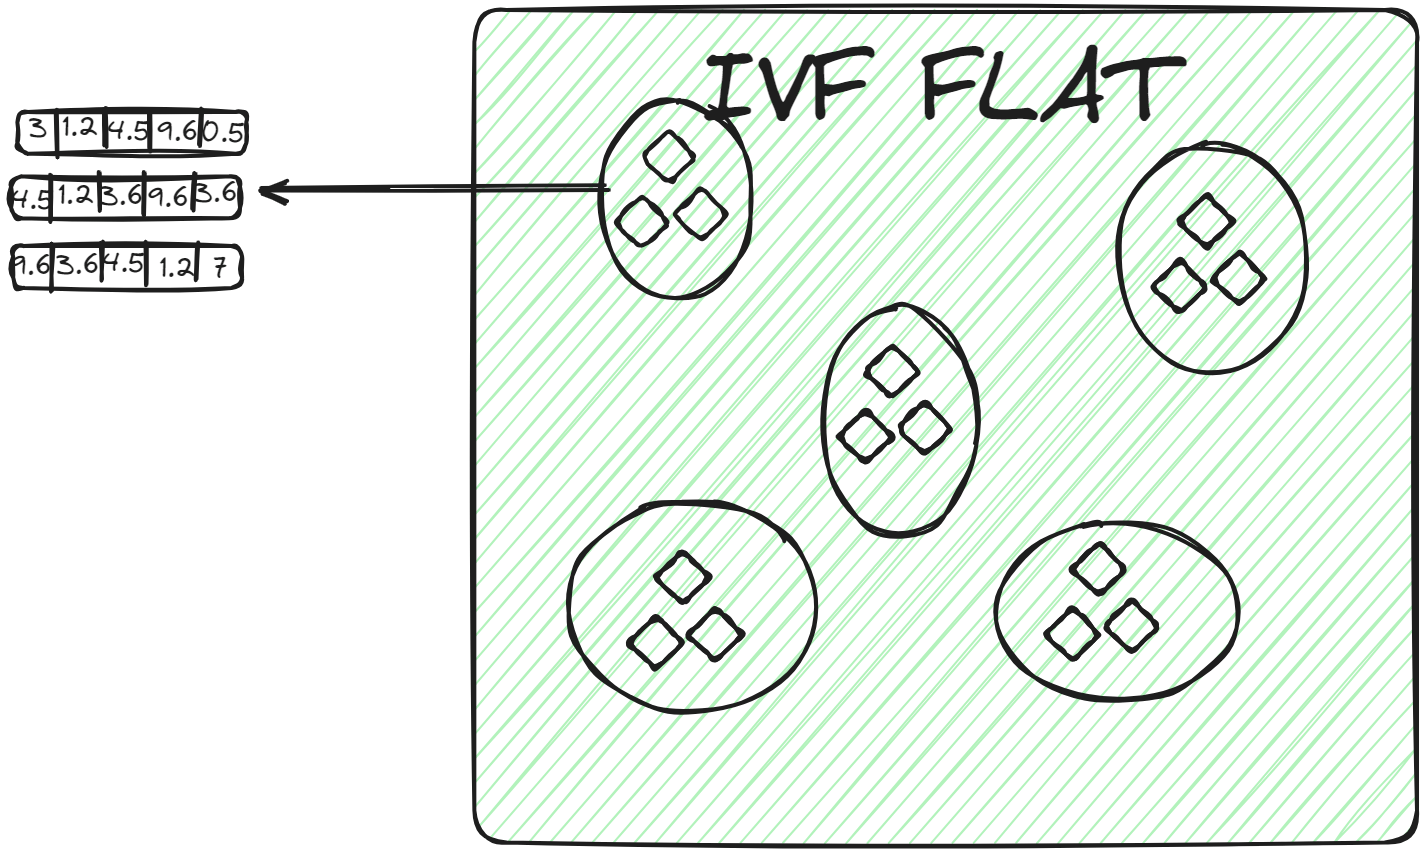 IVF-FLAT